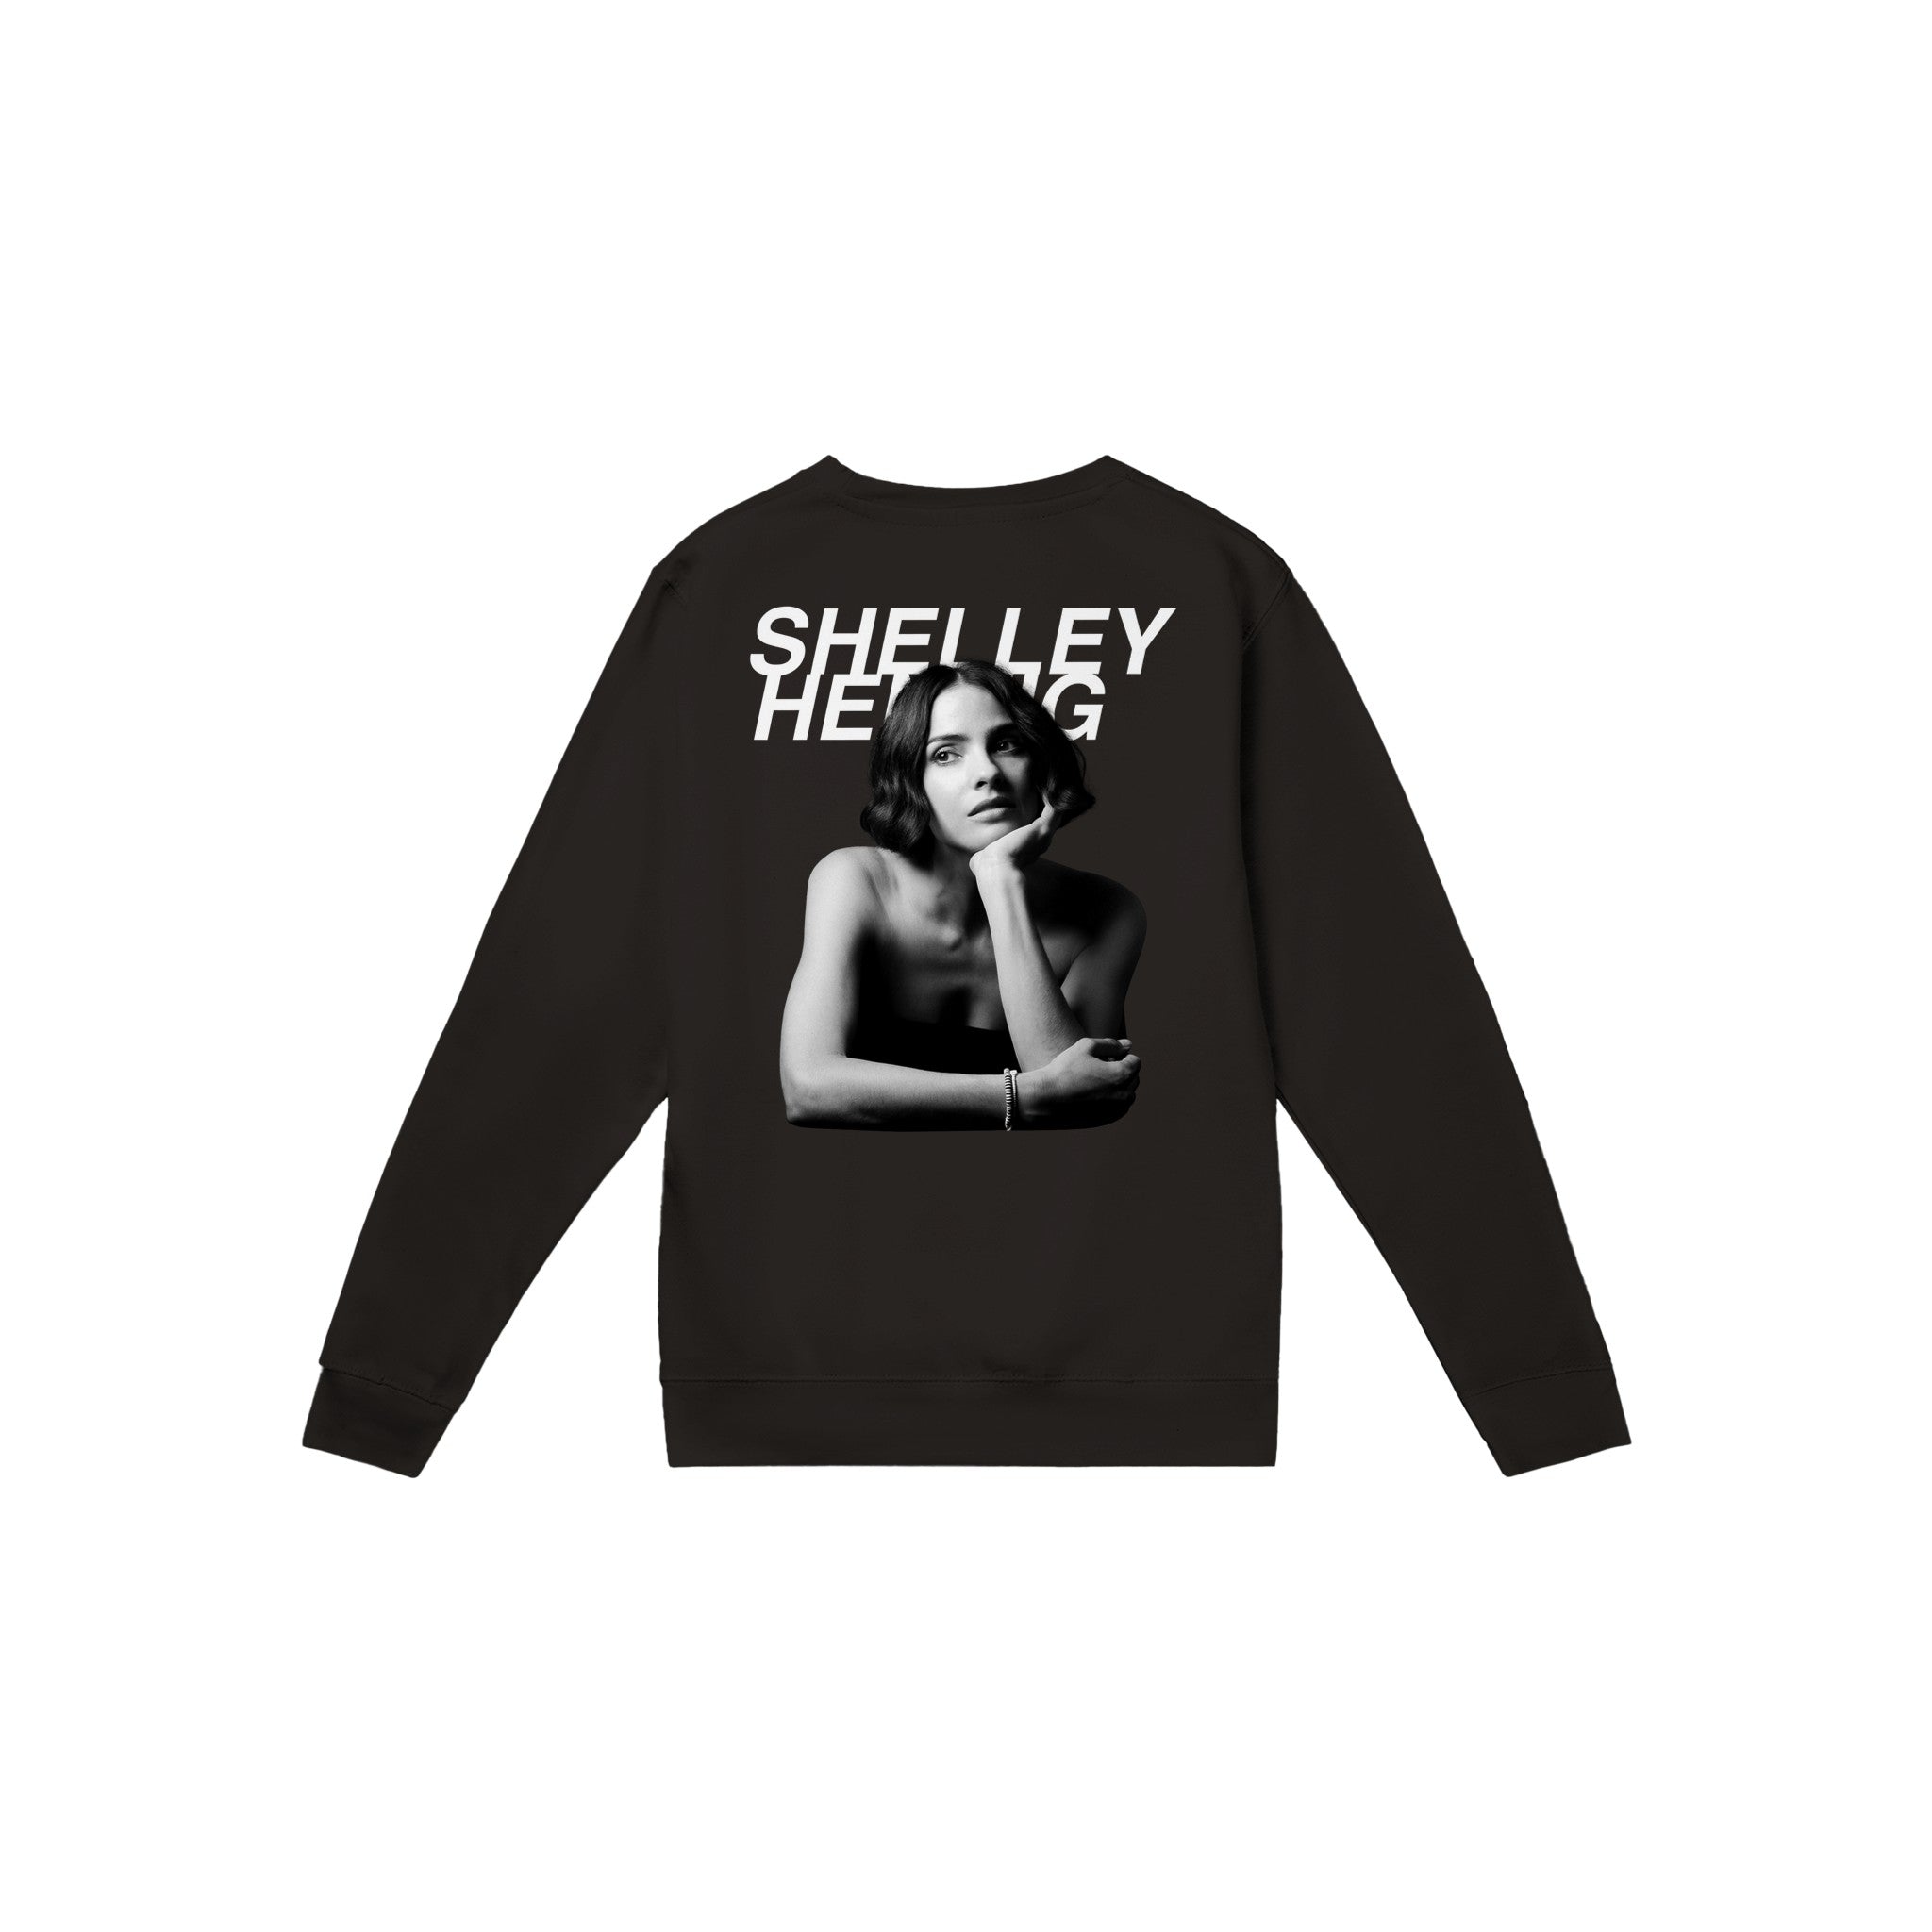 SHELLEY HENNIG sweatshirt